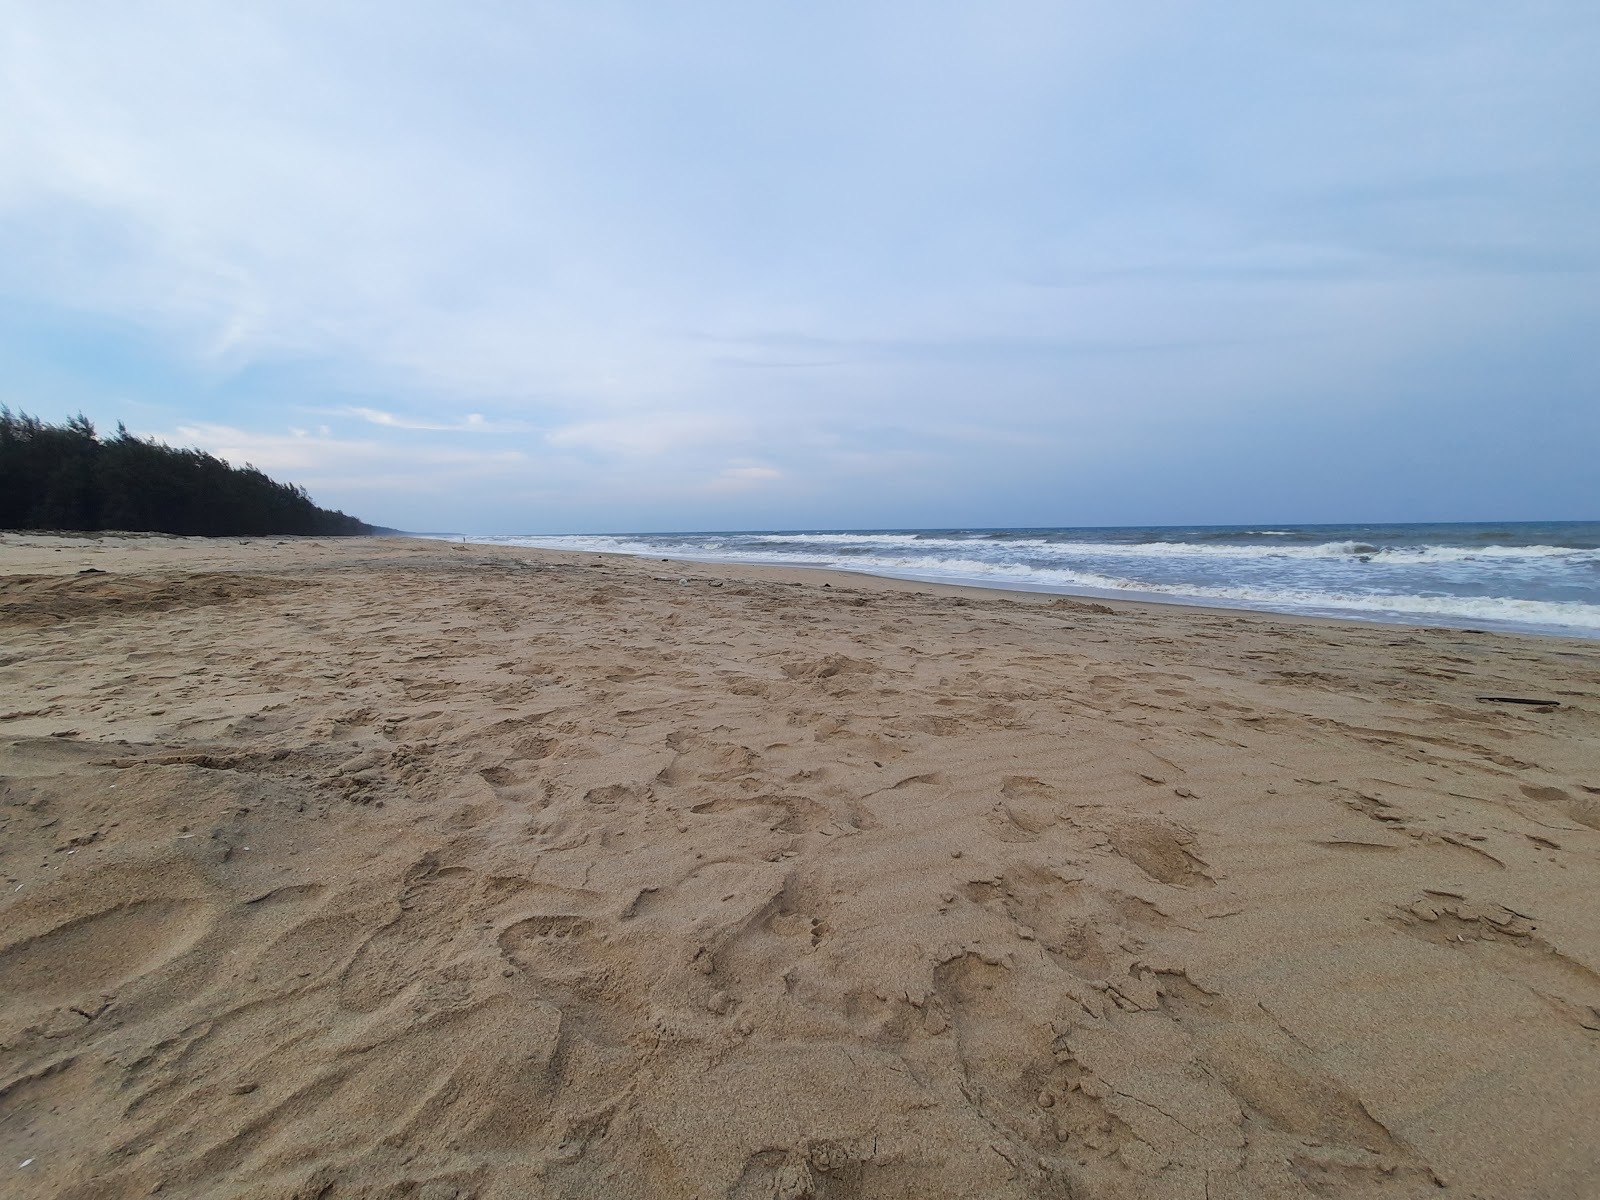 Fotografie cu Koozhaiyar Beach - locul popular printre cunoscătorii de relaxare